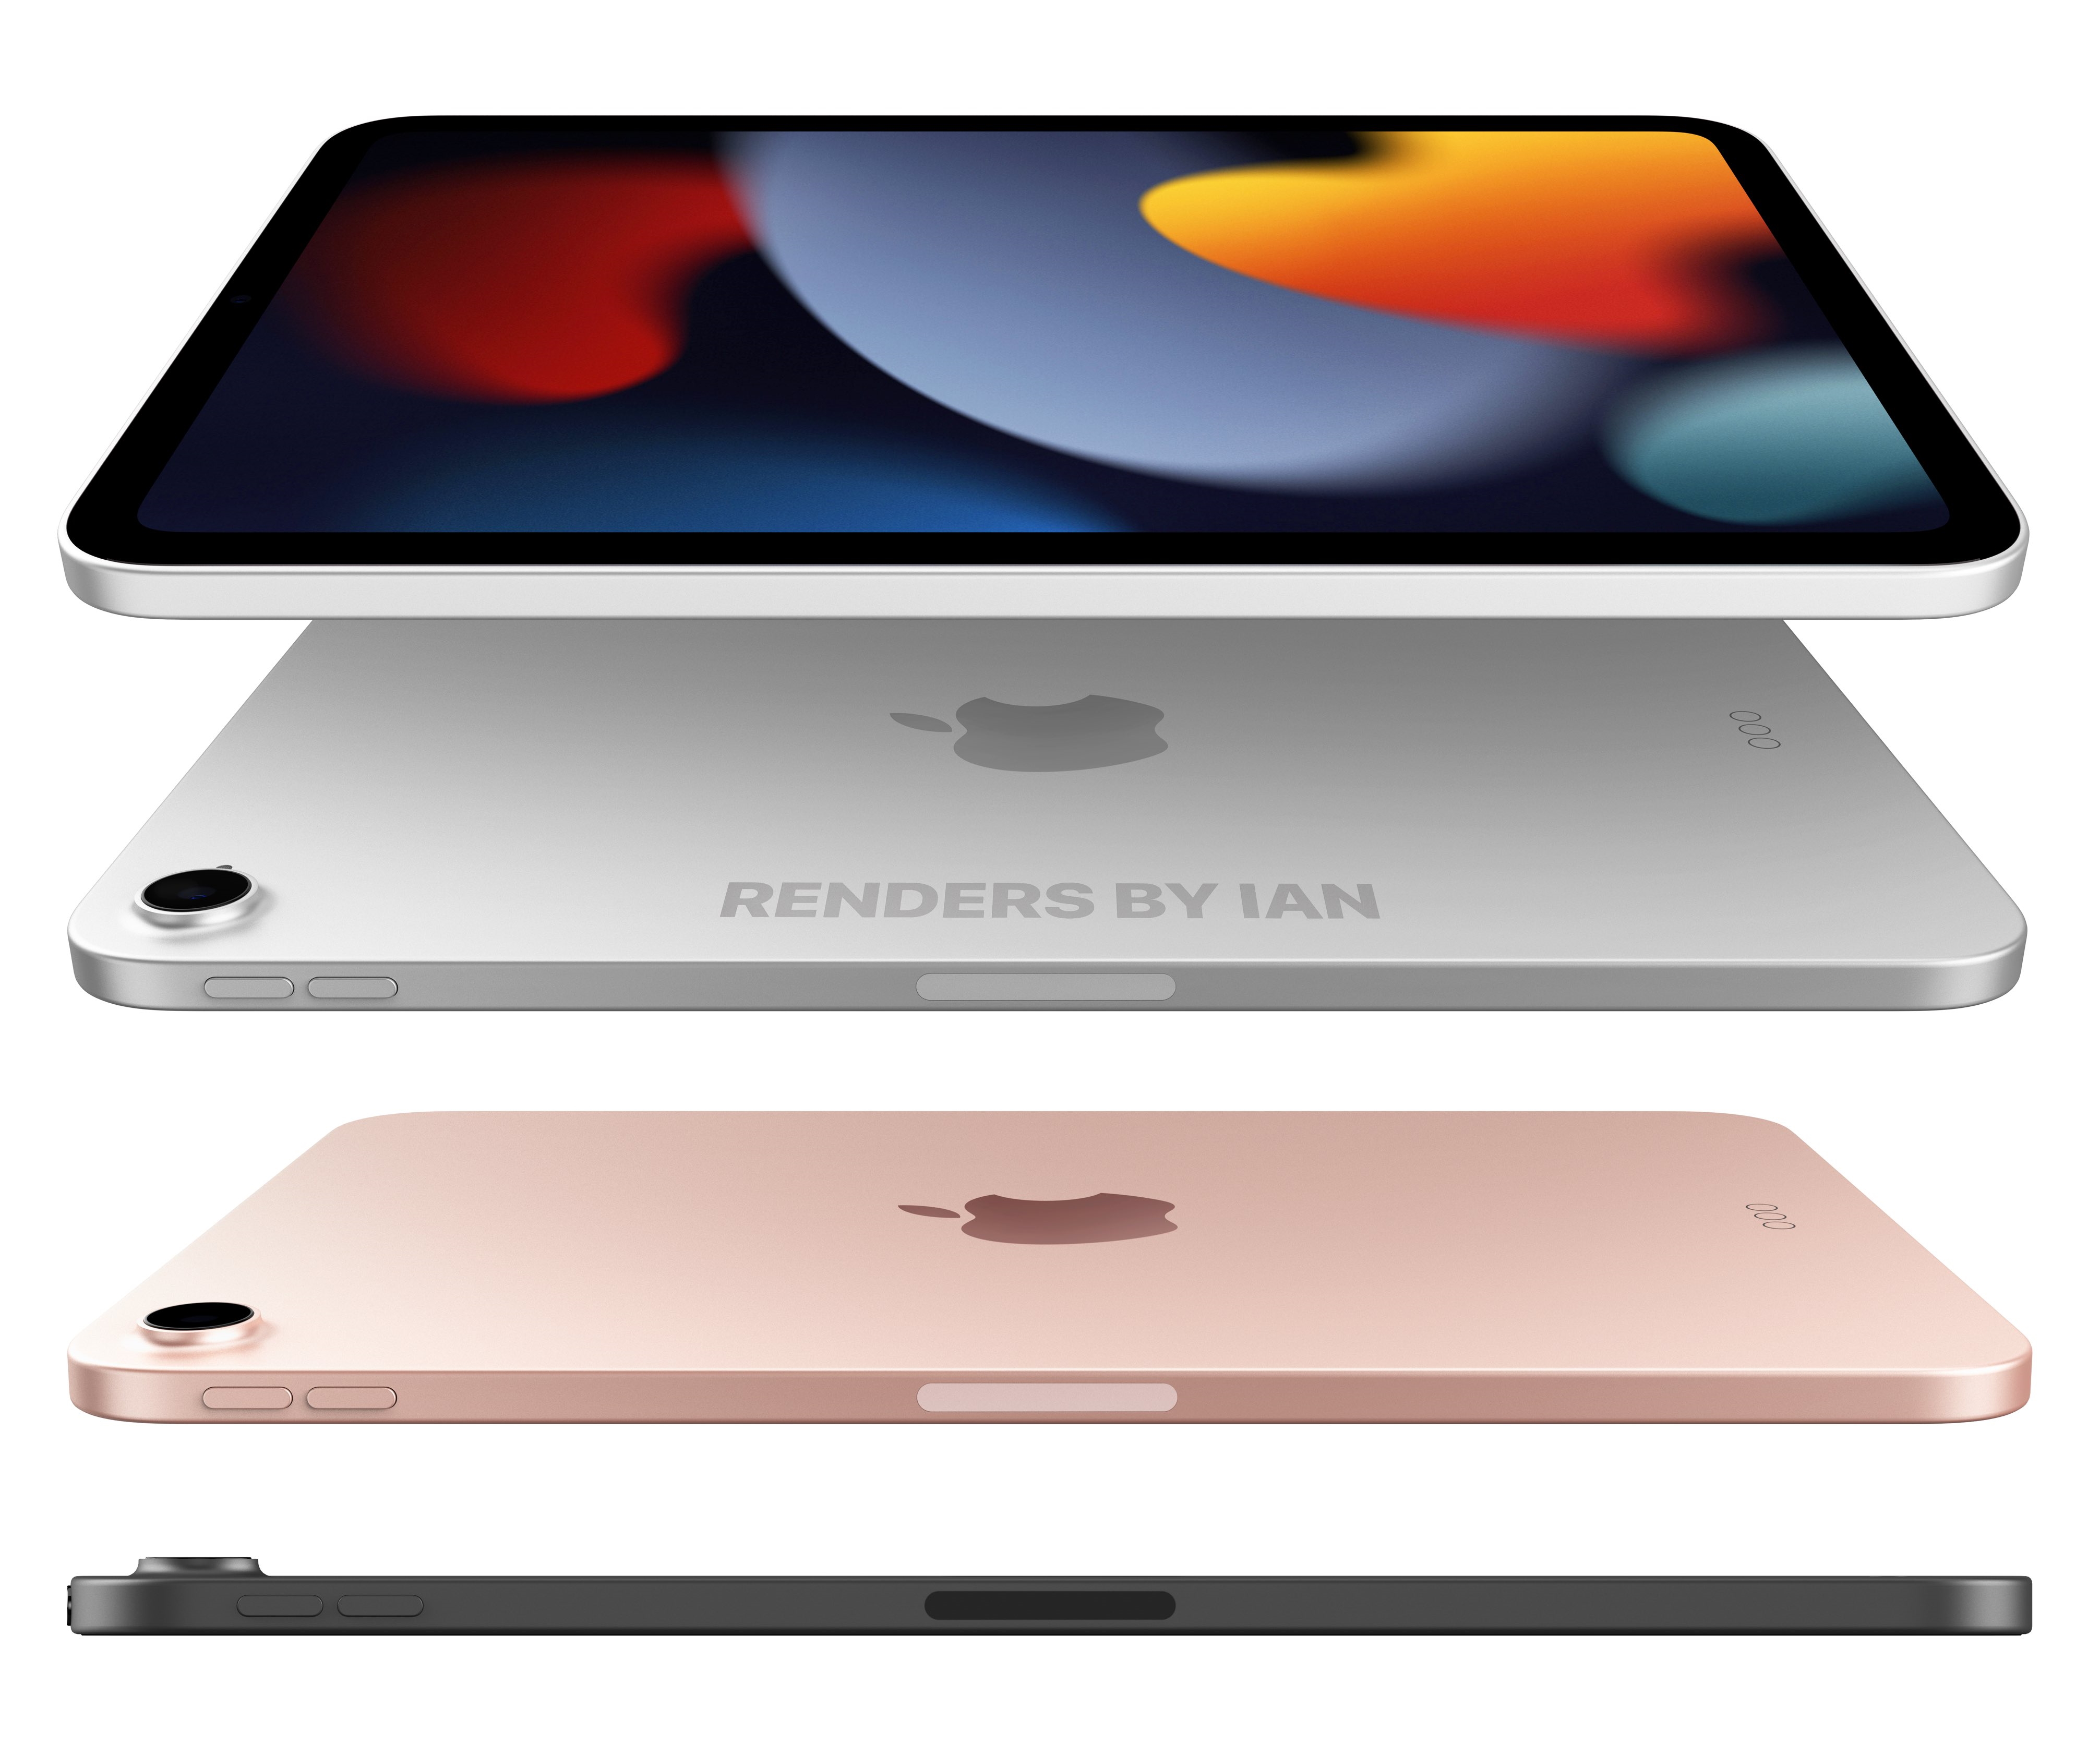 New Apple iPad mini 6 renders leak with an overhauled design 